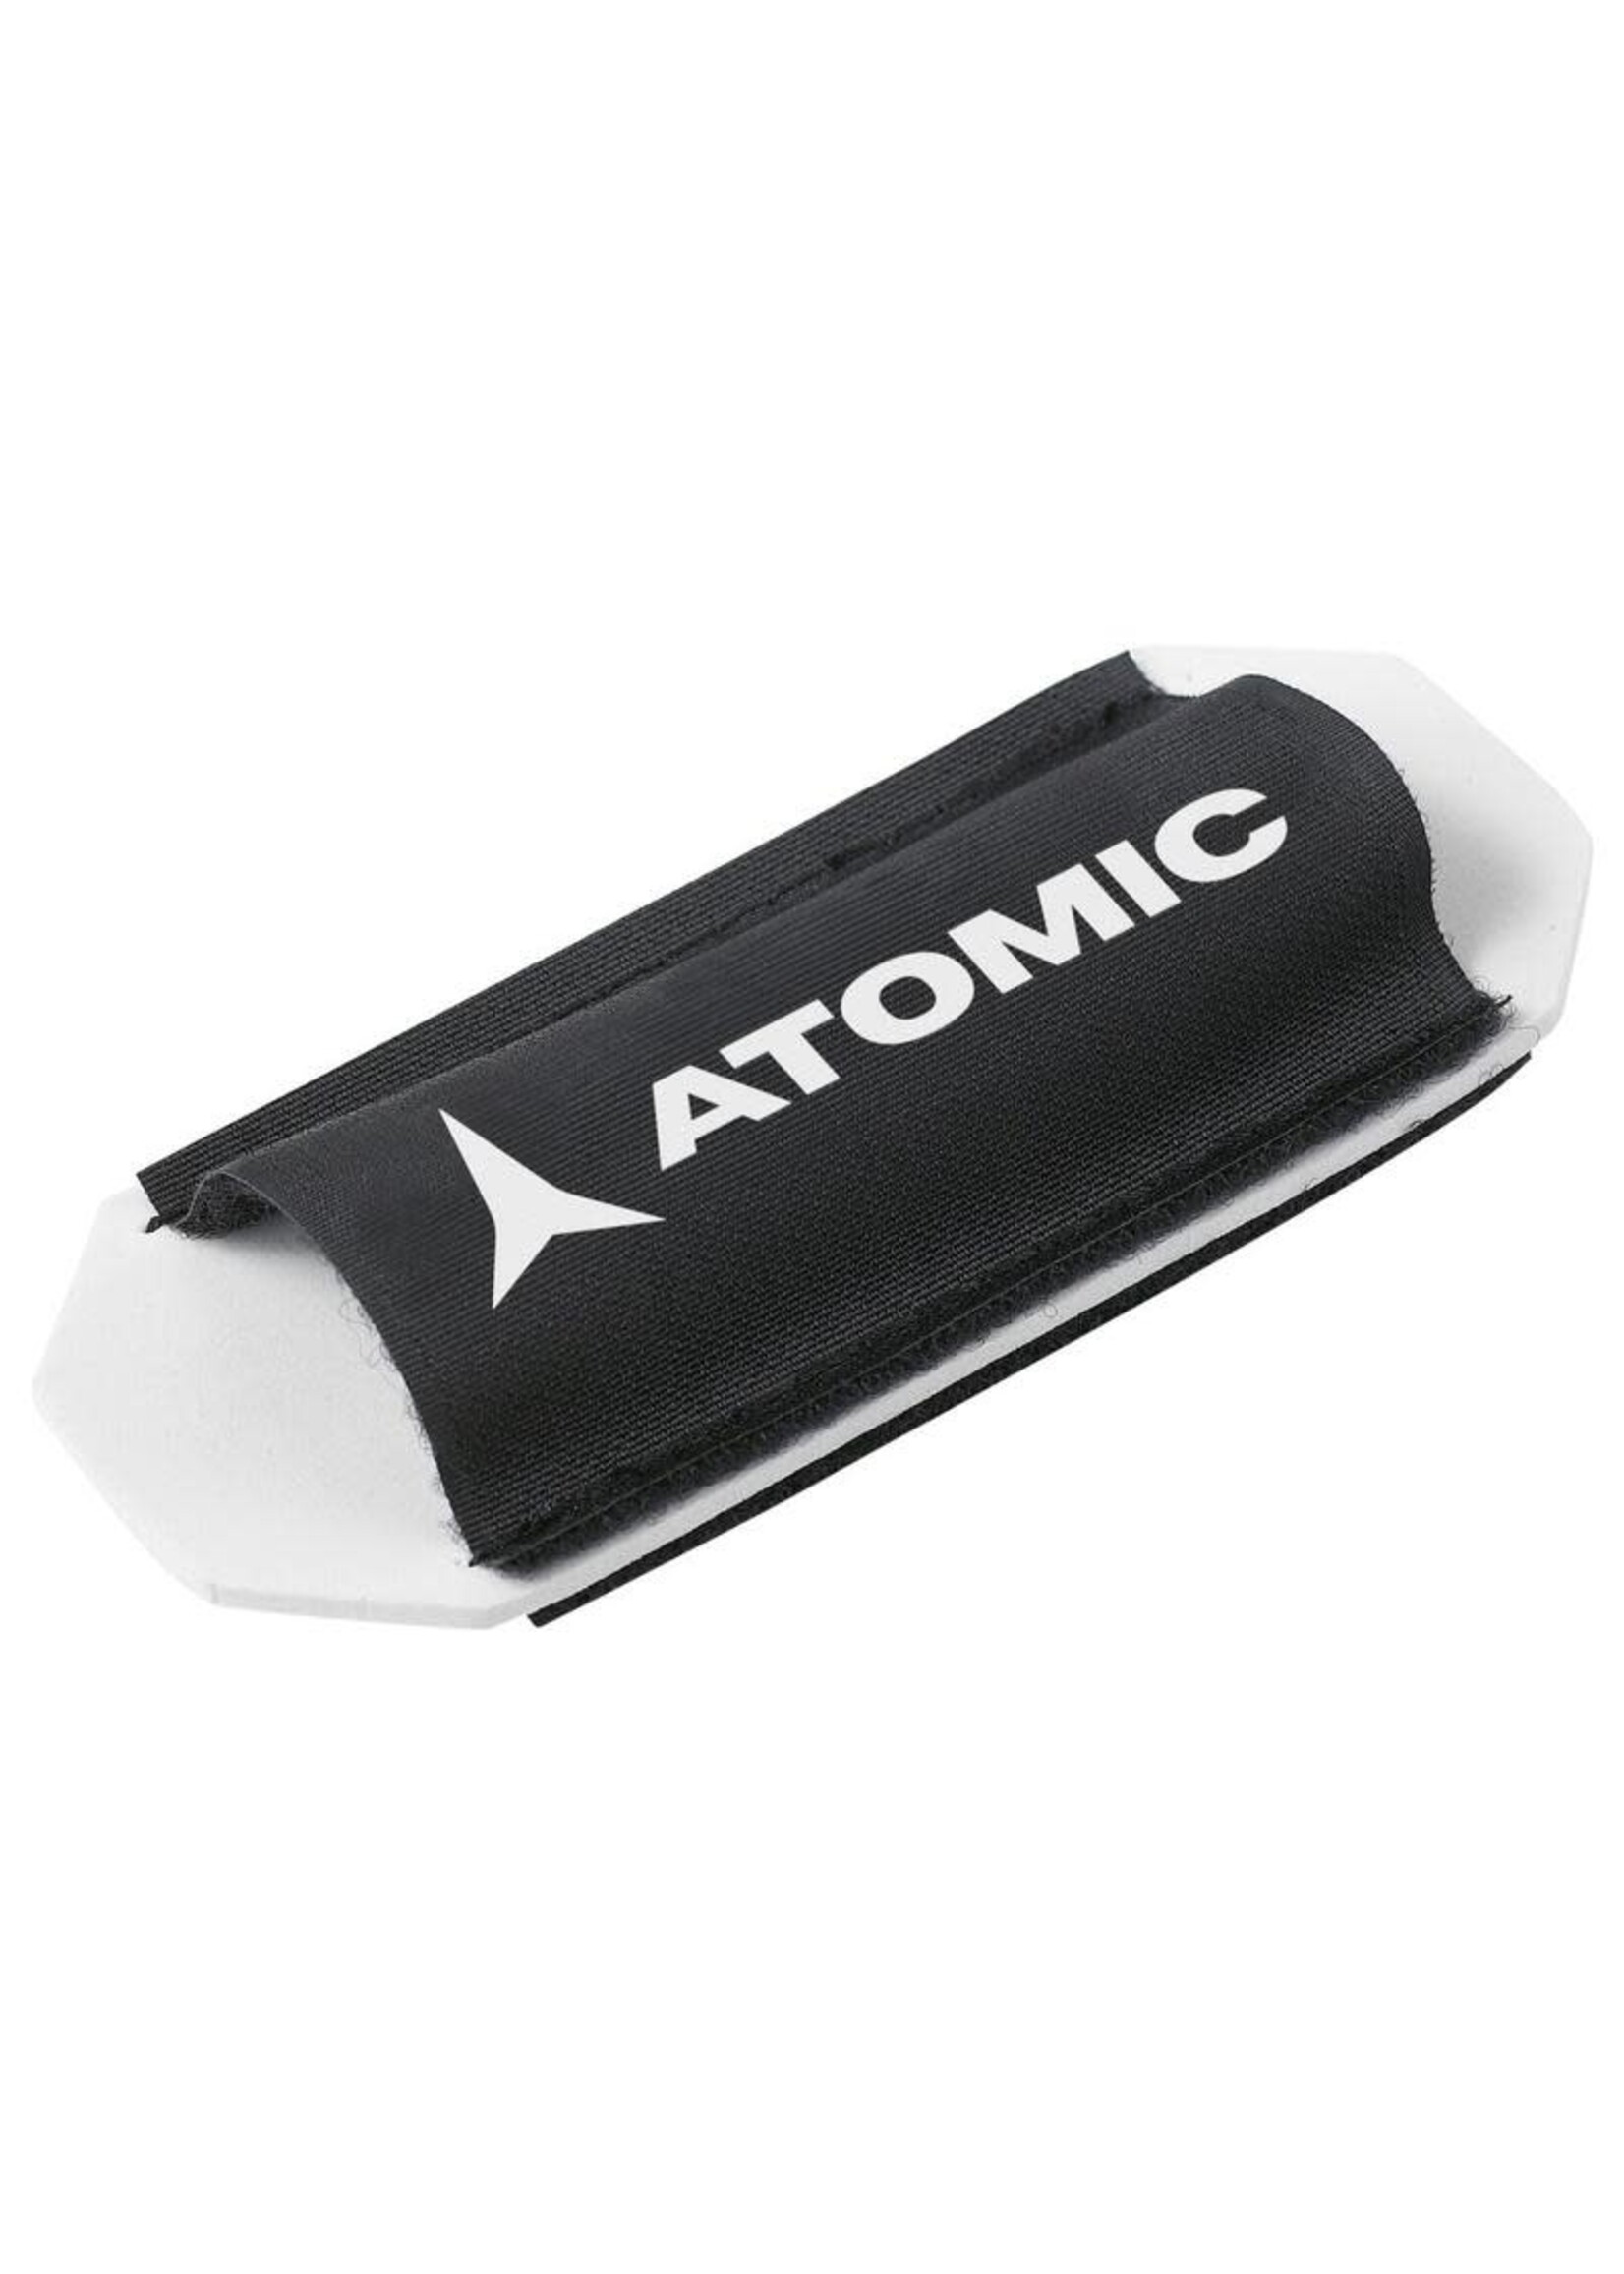 Atomic Nordic Sleeve